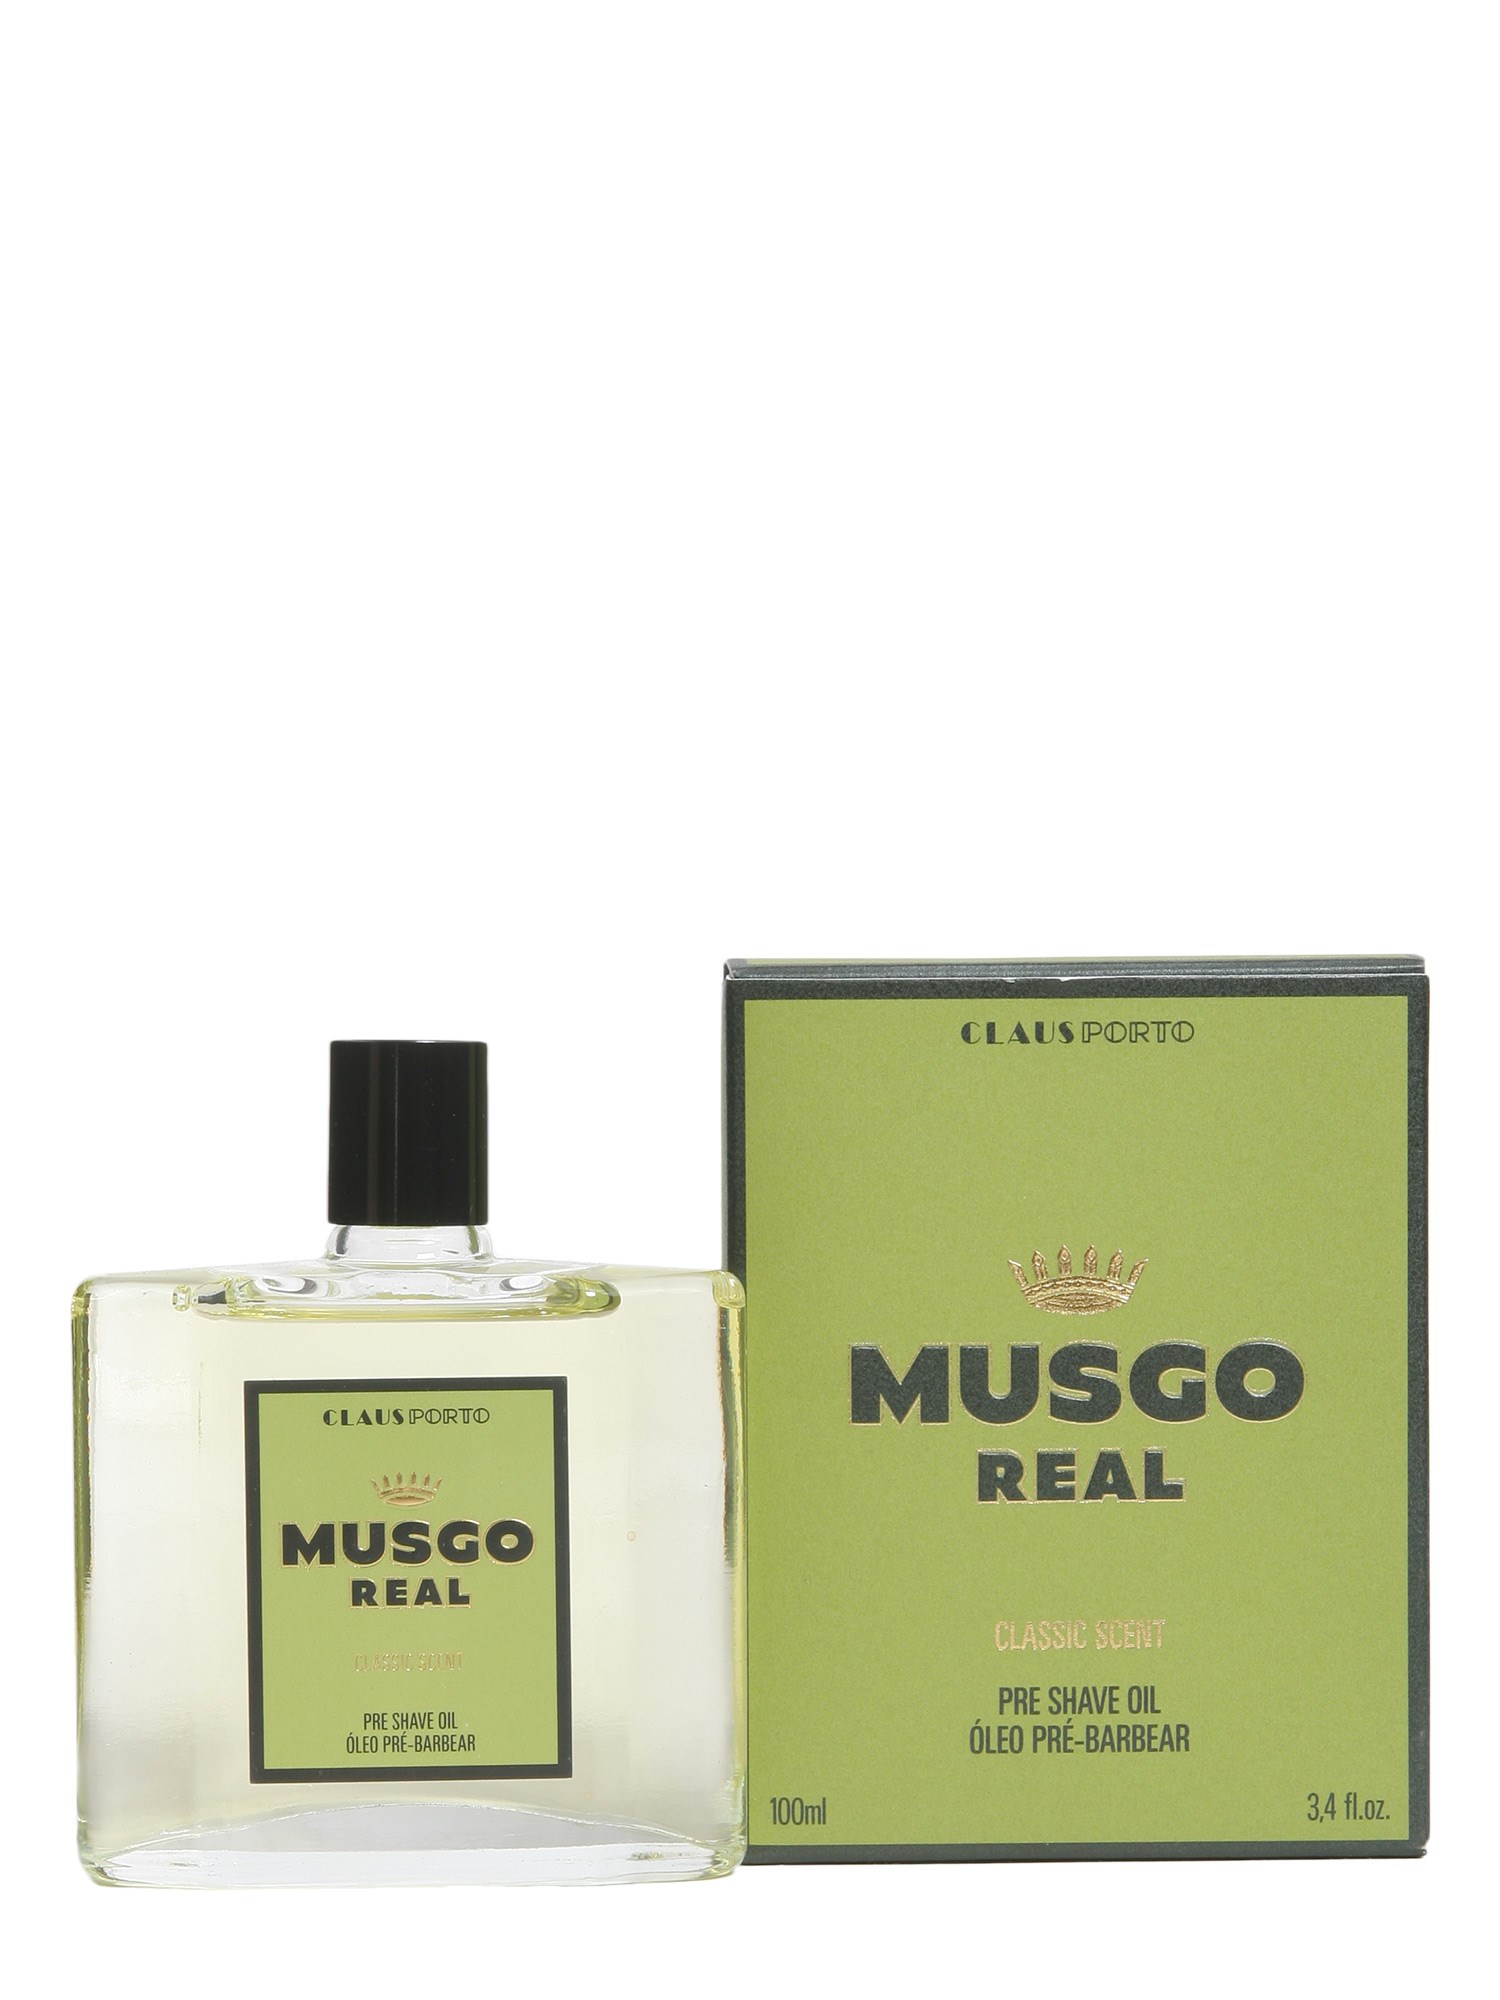 musgo real classic scent pre-shave oil